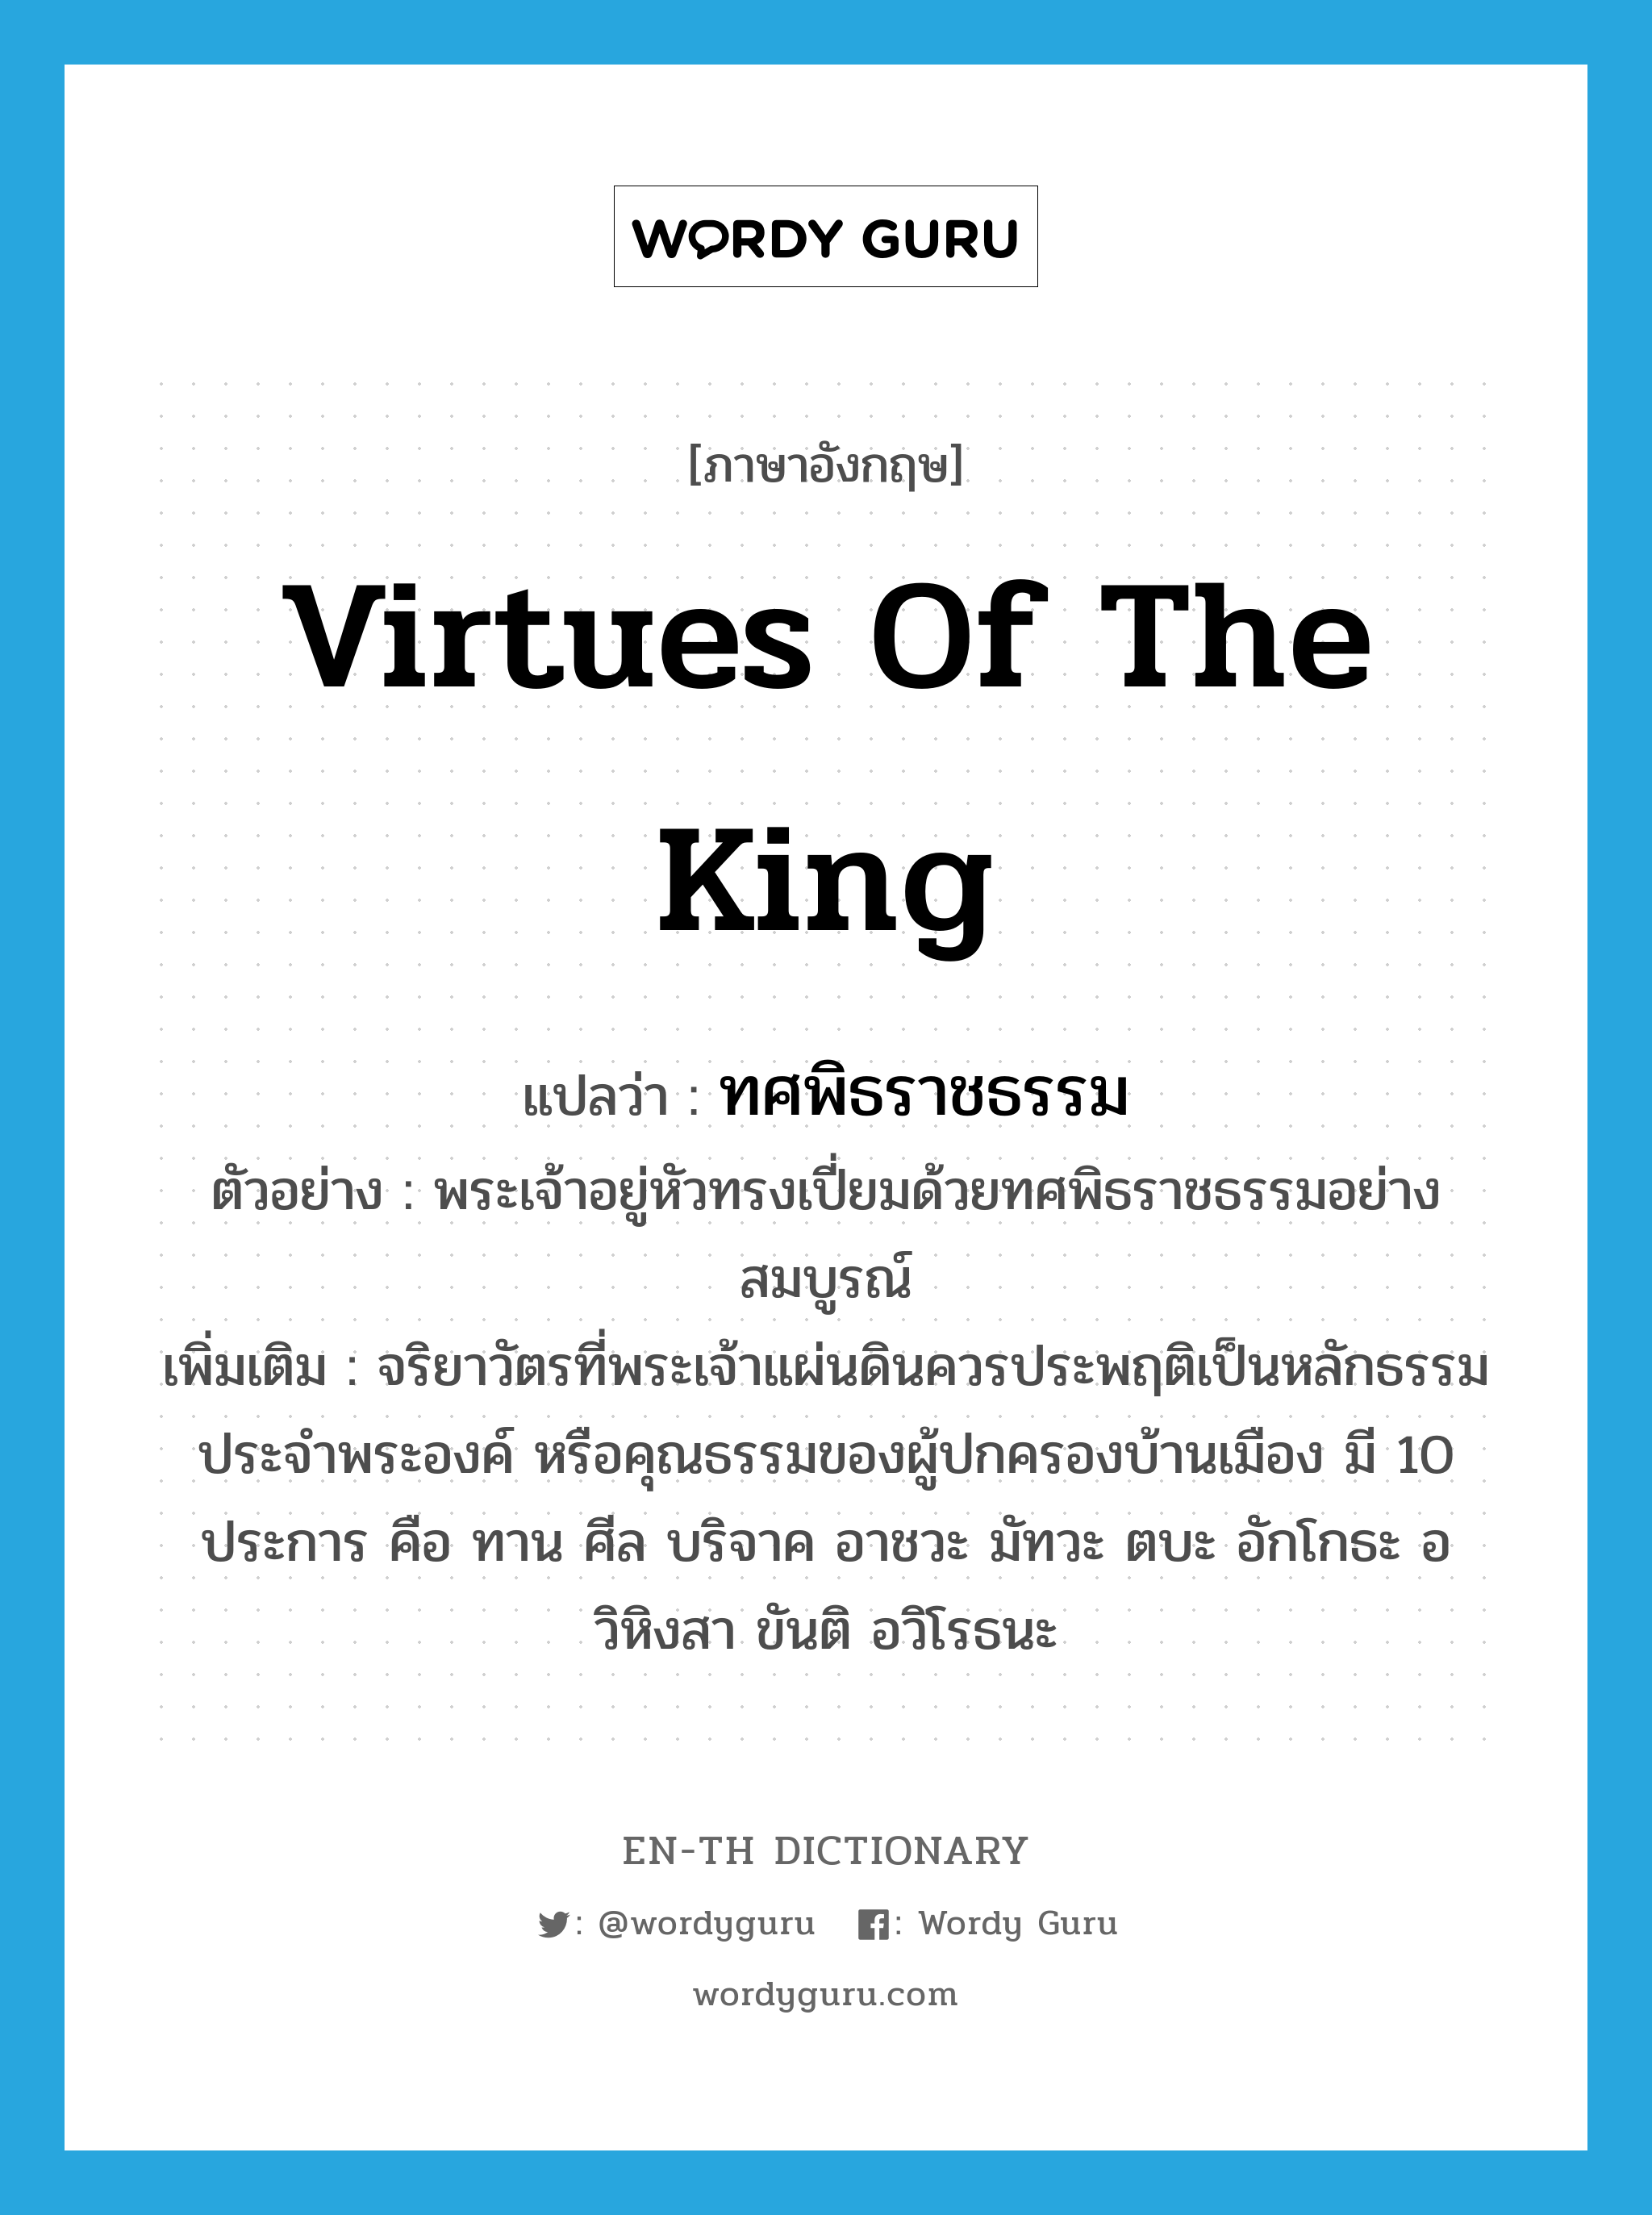 virtues of the king แปลว่า?, คำศัพท์ภาษาอังกฤษ virtues of the king แปลว่า ทศพิธราชธรรม ประเภท N ตัวอย่าง พระเจ้าอยู่หัวทรงเปี่ยมด้วยทศพิธราชธรรมอย่างสมบูรณ์ เพิ่มเติม จริยาวัตรที่พระเจ้าแผ่นดินควรประพฤติเป็นหลักธรรมประจำพระองค์ หรือคุณธรรมของผู้ปกครองบ้านเมือง มี 10 ประการ คือ ทาน ศีล บริจาค อาชวะ มัทวะ ตบะ อักโกธะ อวิหิงสา ขันติ อวิโรธนะ หมวด N